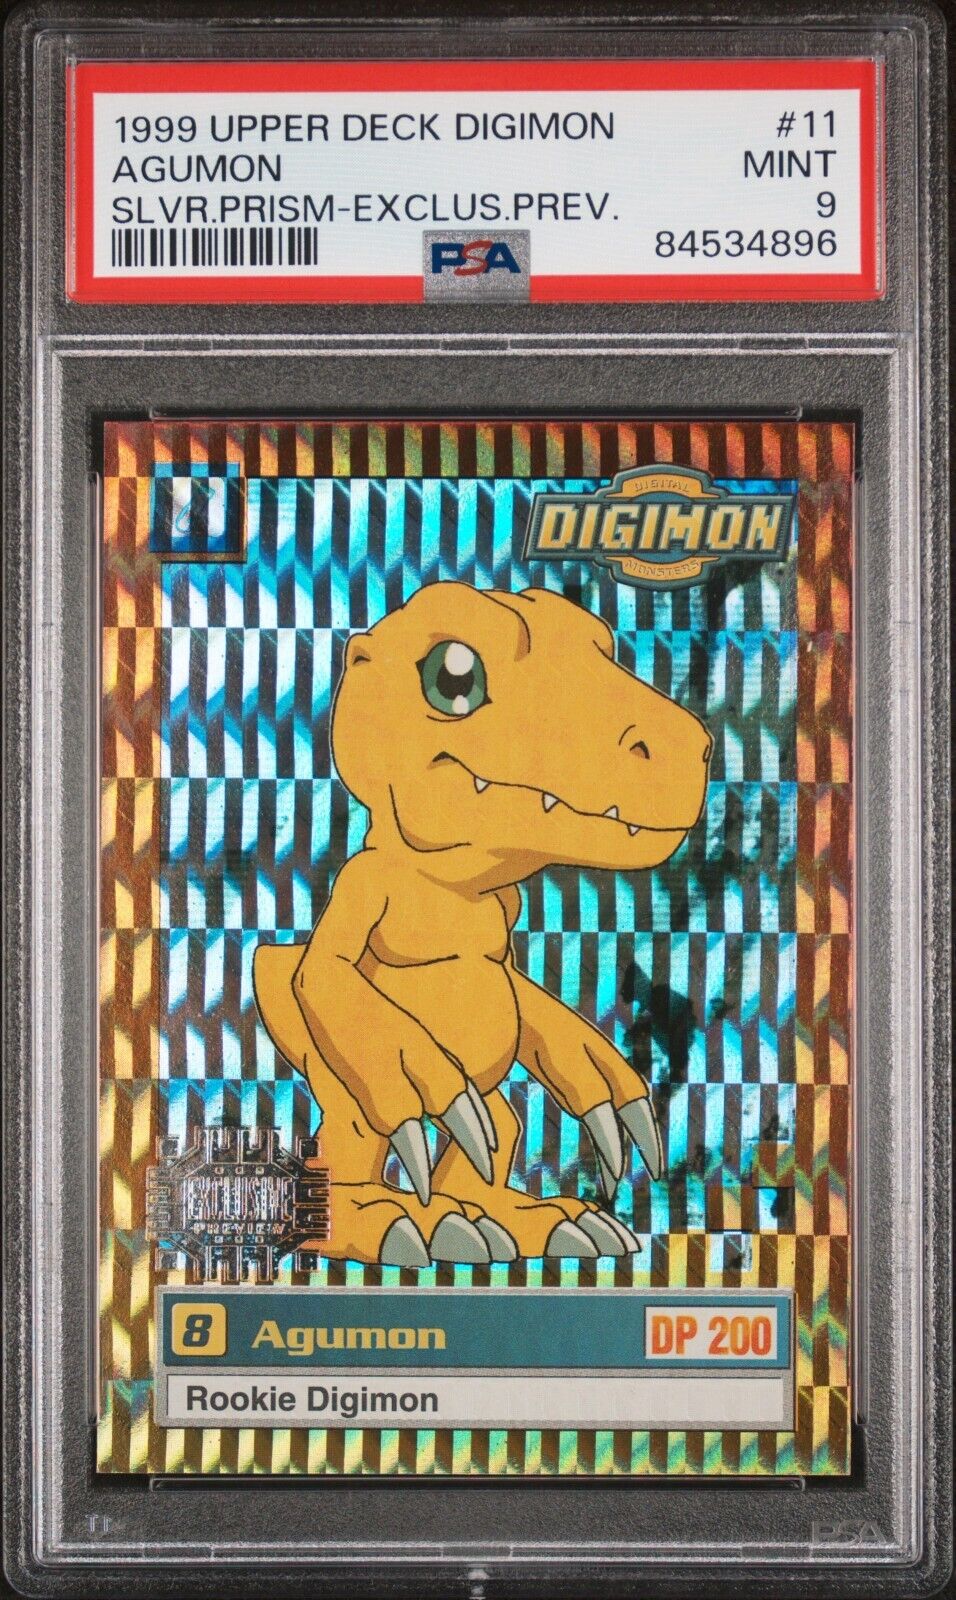 1999 Upper Deck Digimon - Agumon #11 Silver Prism Exclusive Preview PSA 9